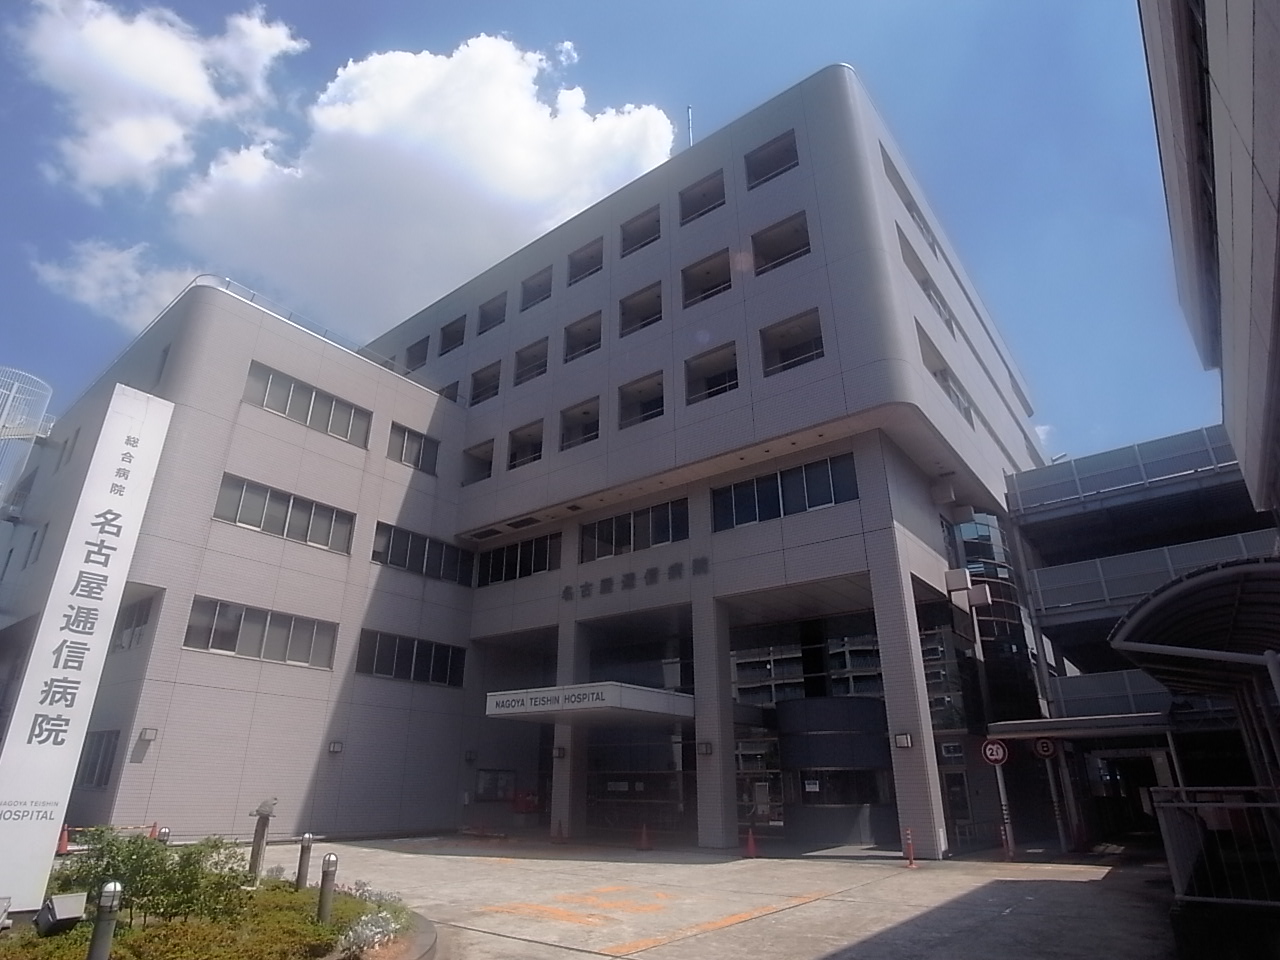 Hospital. 1100m to Nagoya the Communications Hospital (General Hospital) (hospital)